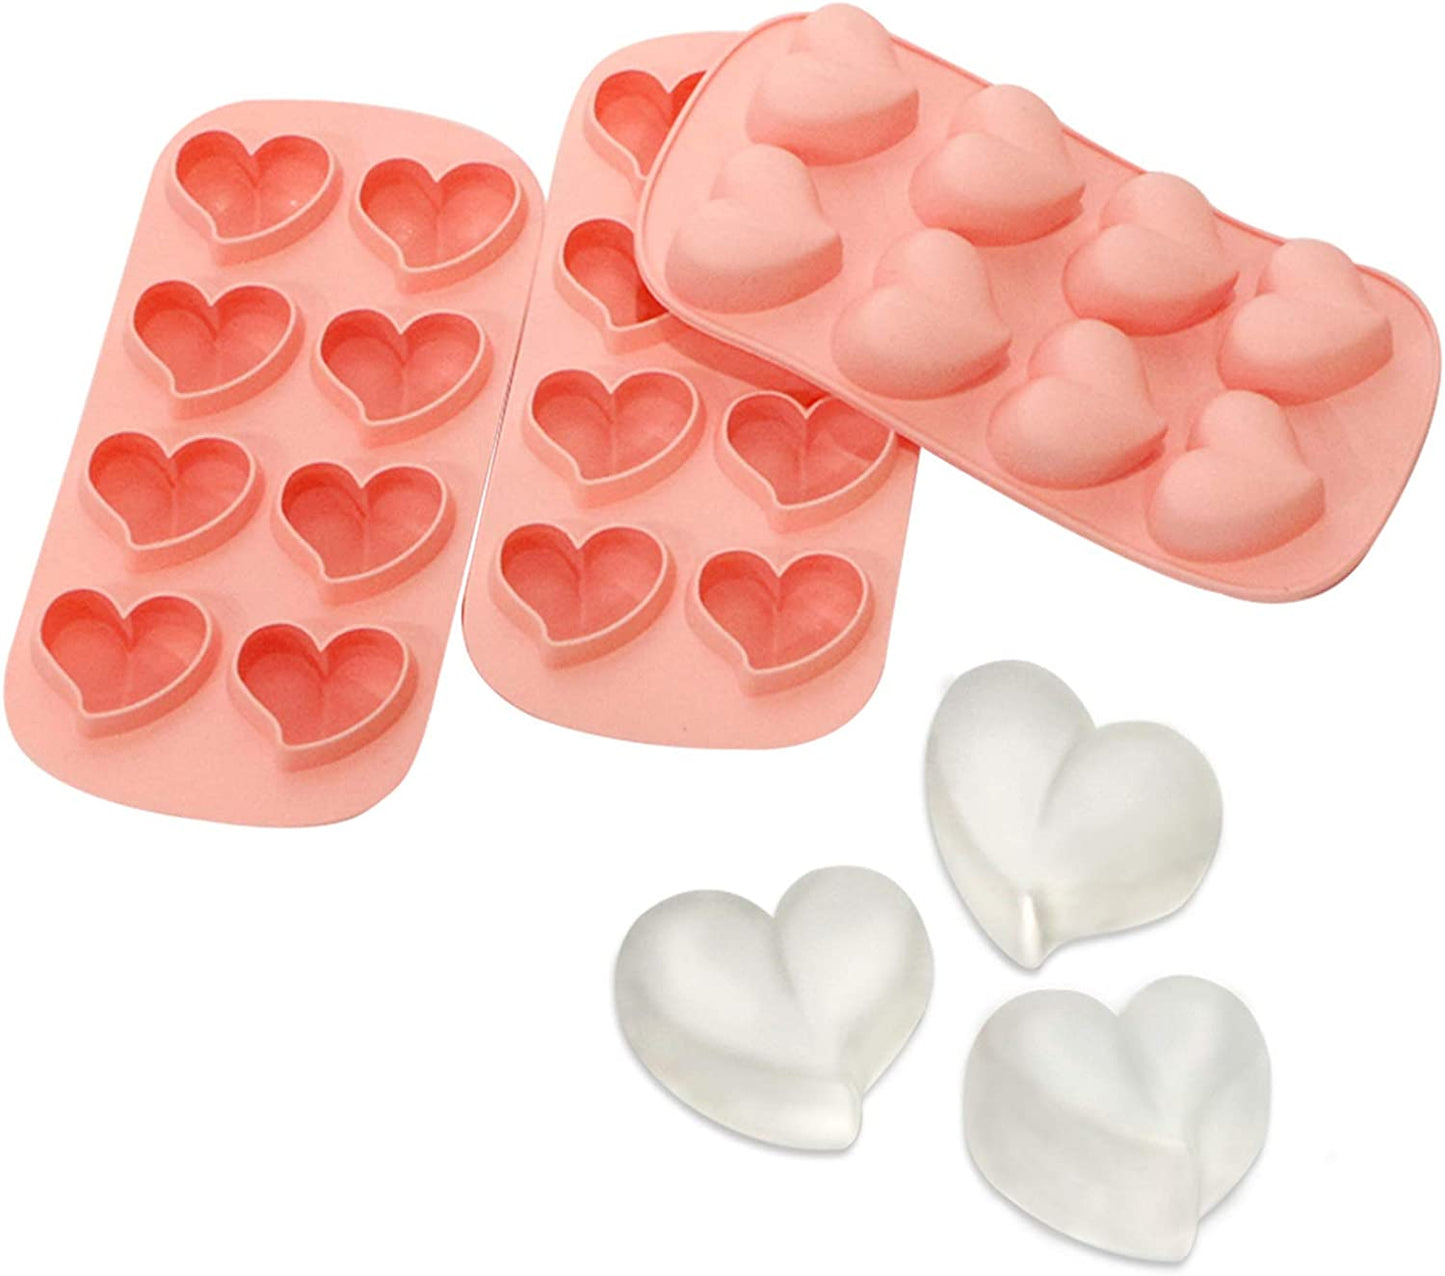 Webake silicone reusable heart shaped ice cube maker trays,Set of 3